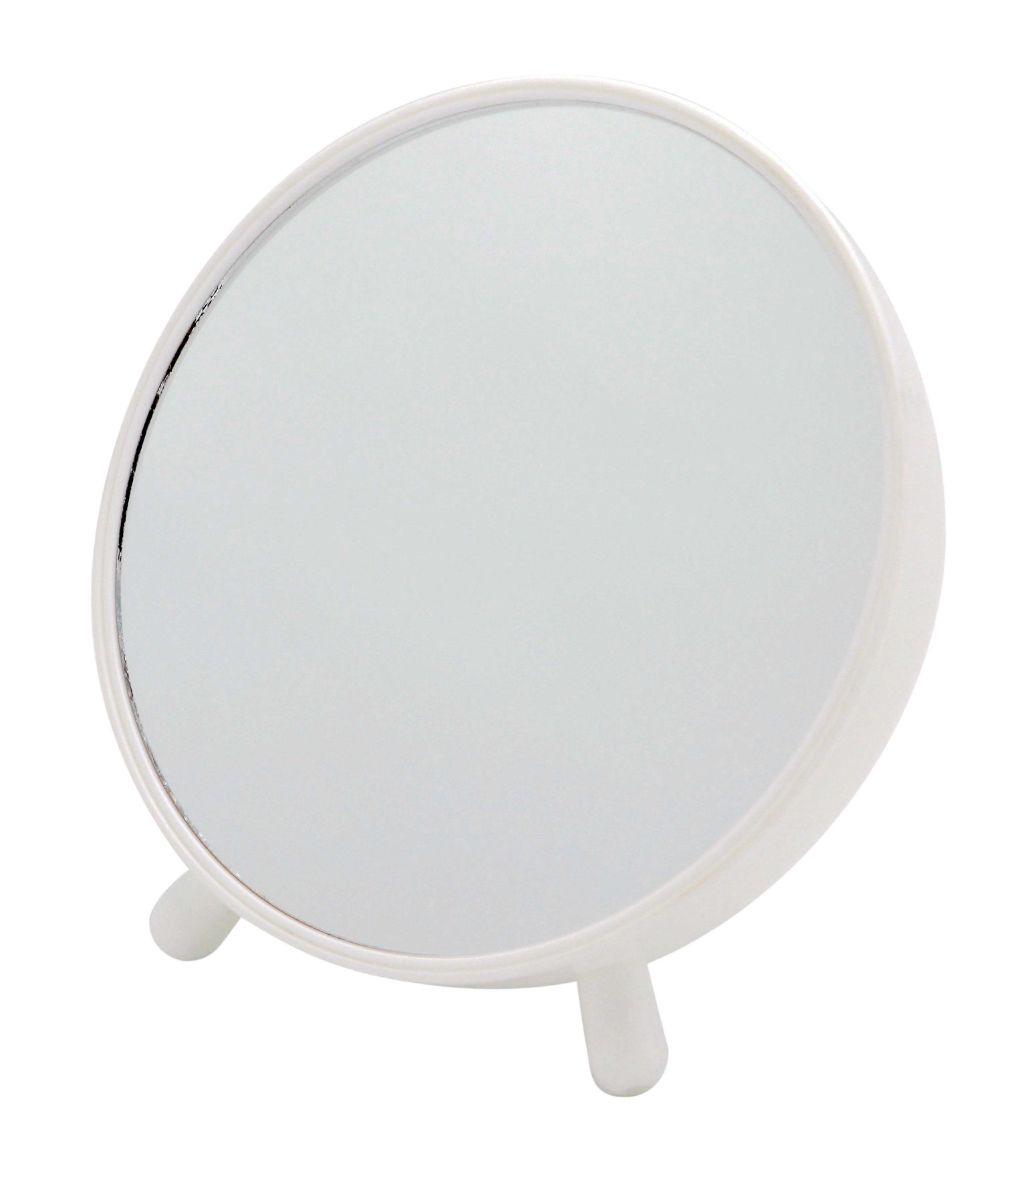 Storage Plastic Mirror - White**